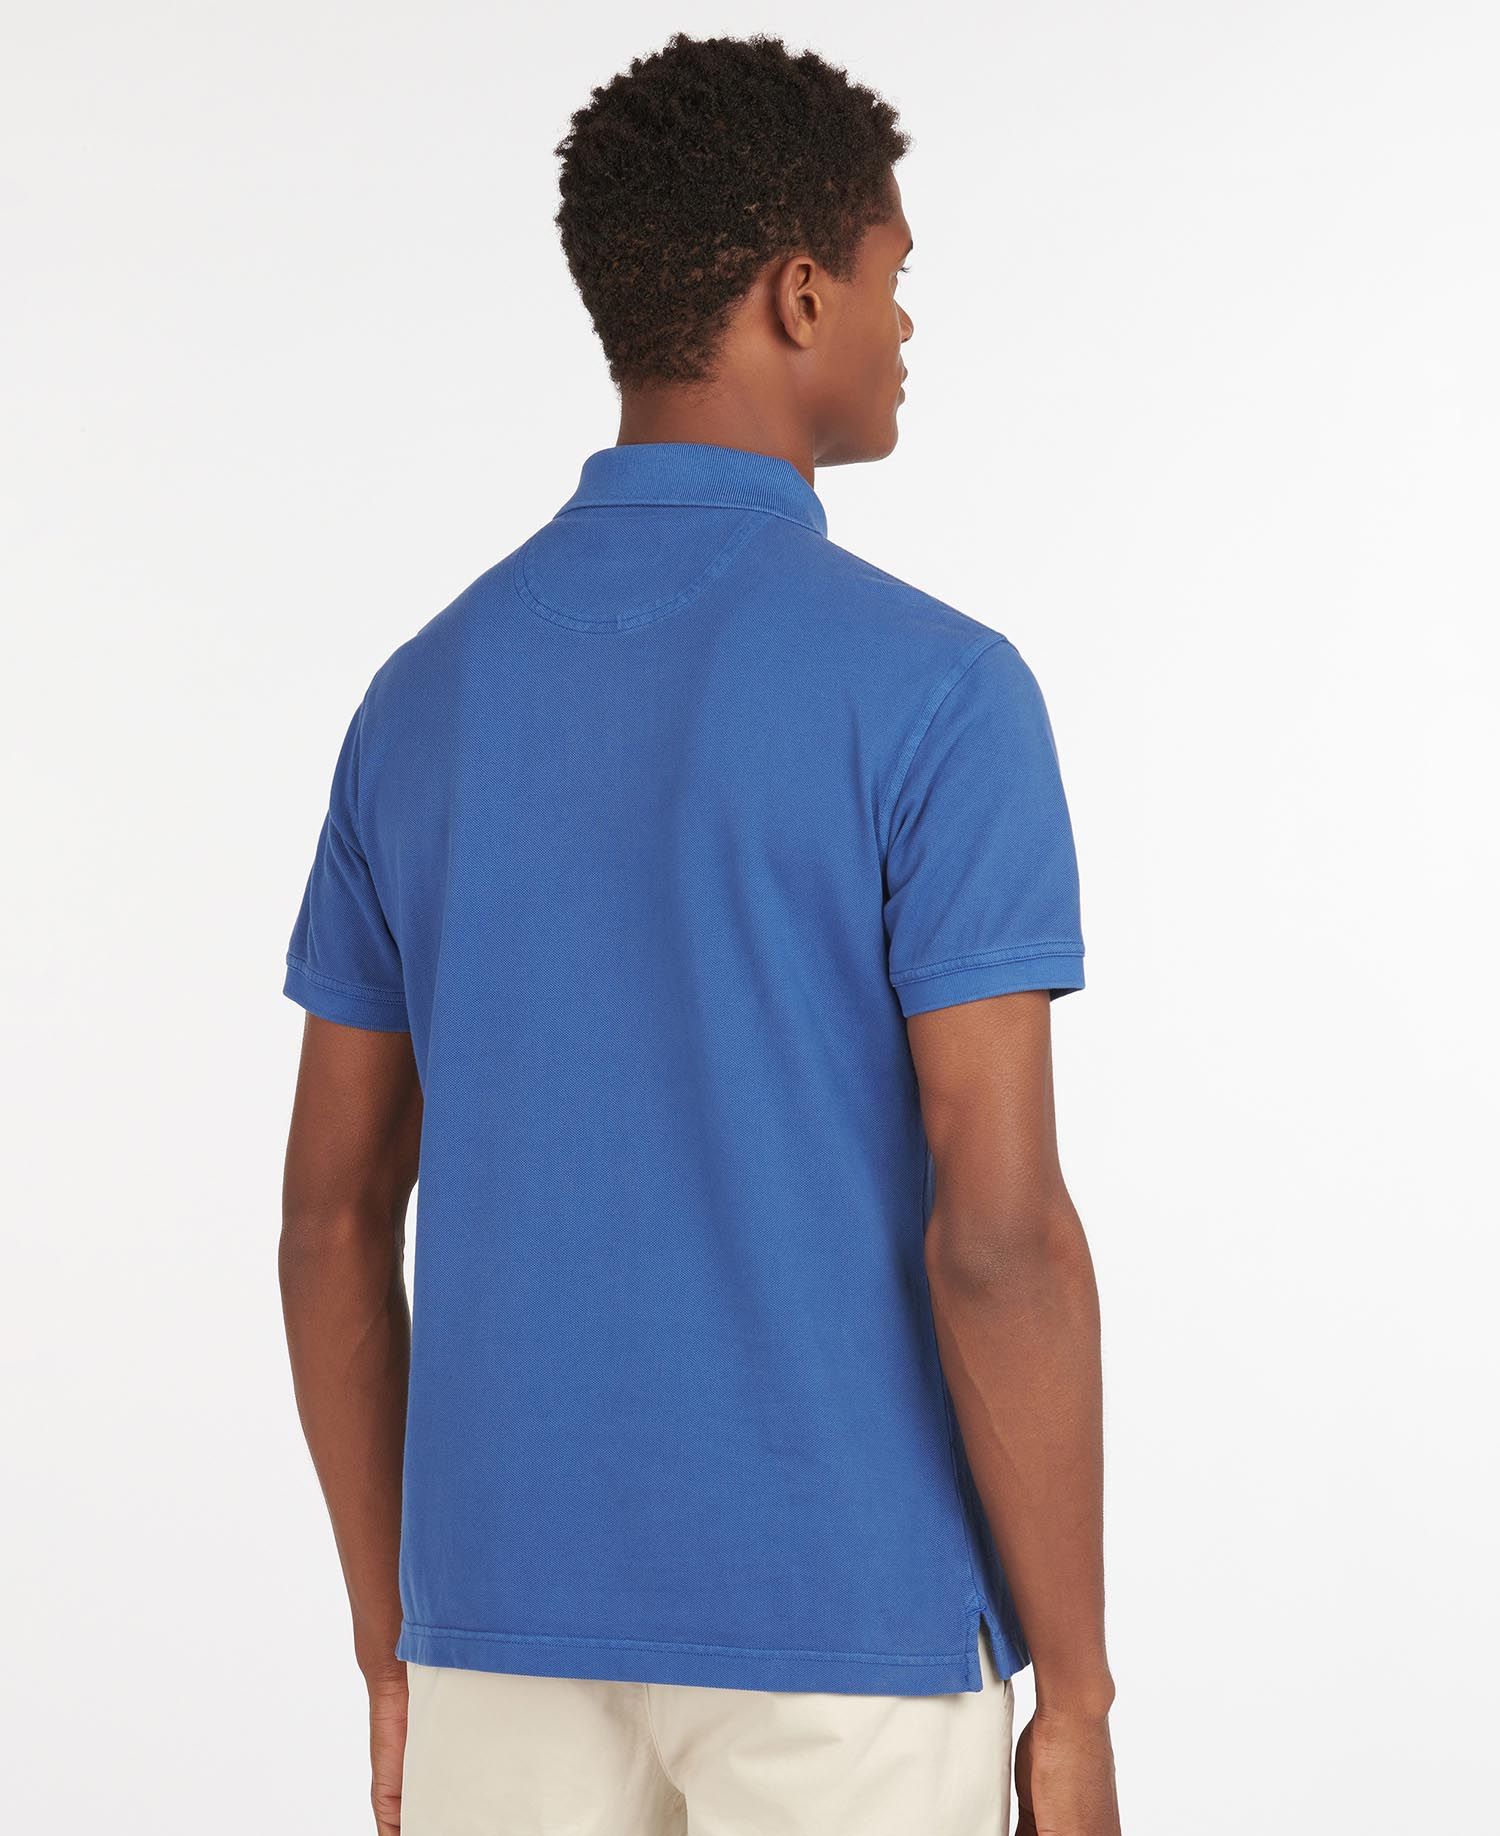 Washed Out Sports Polo Shirt – Marine Blue